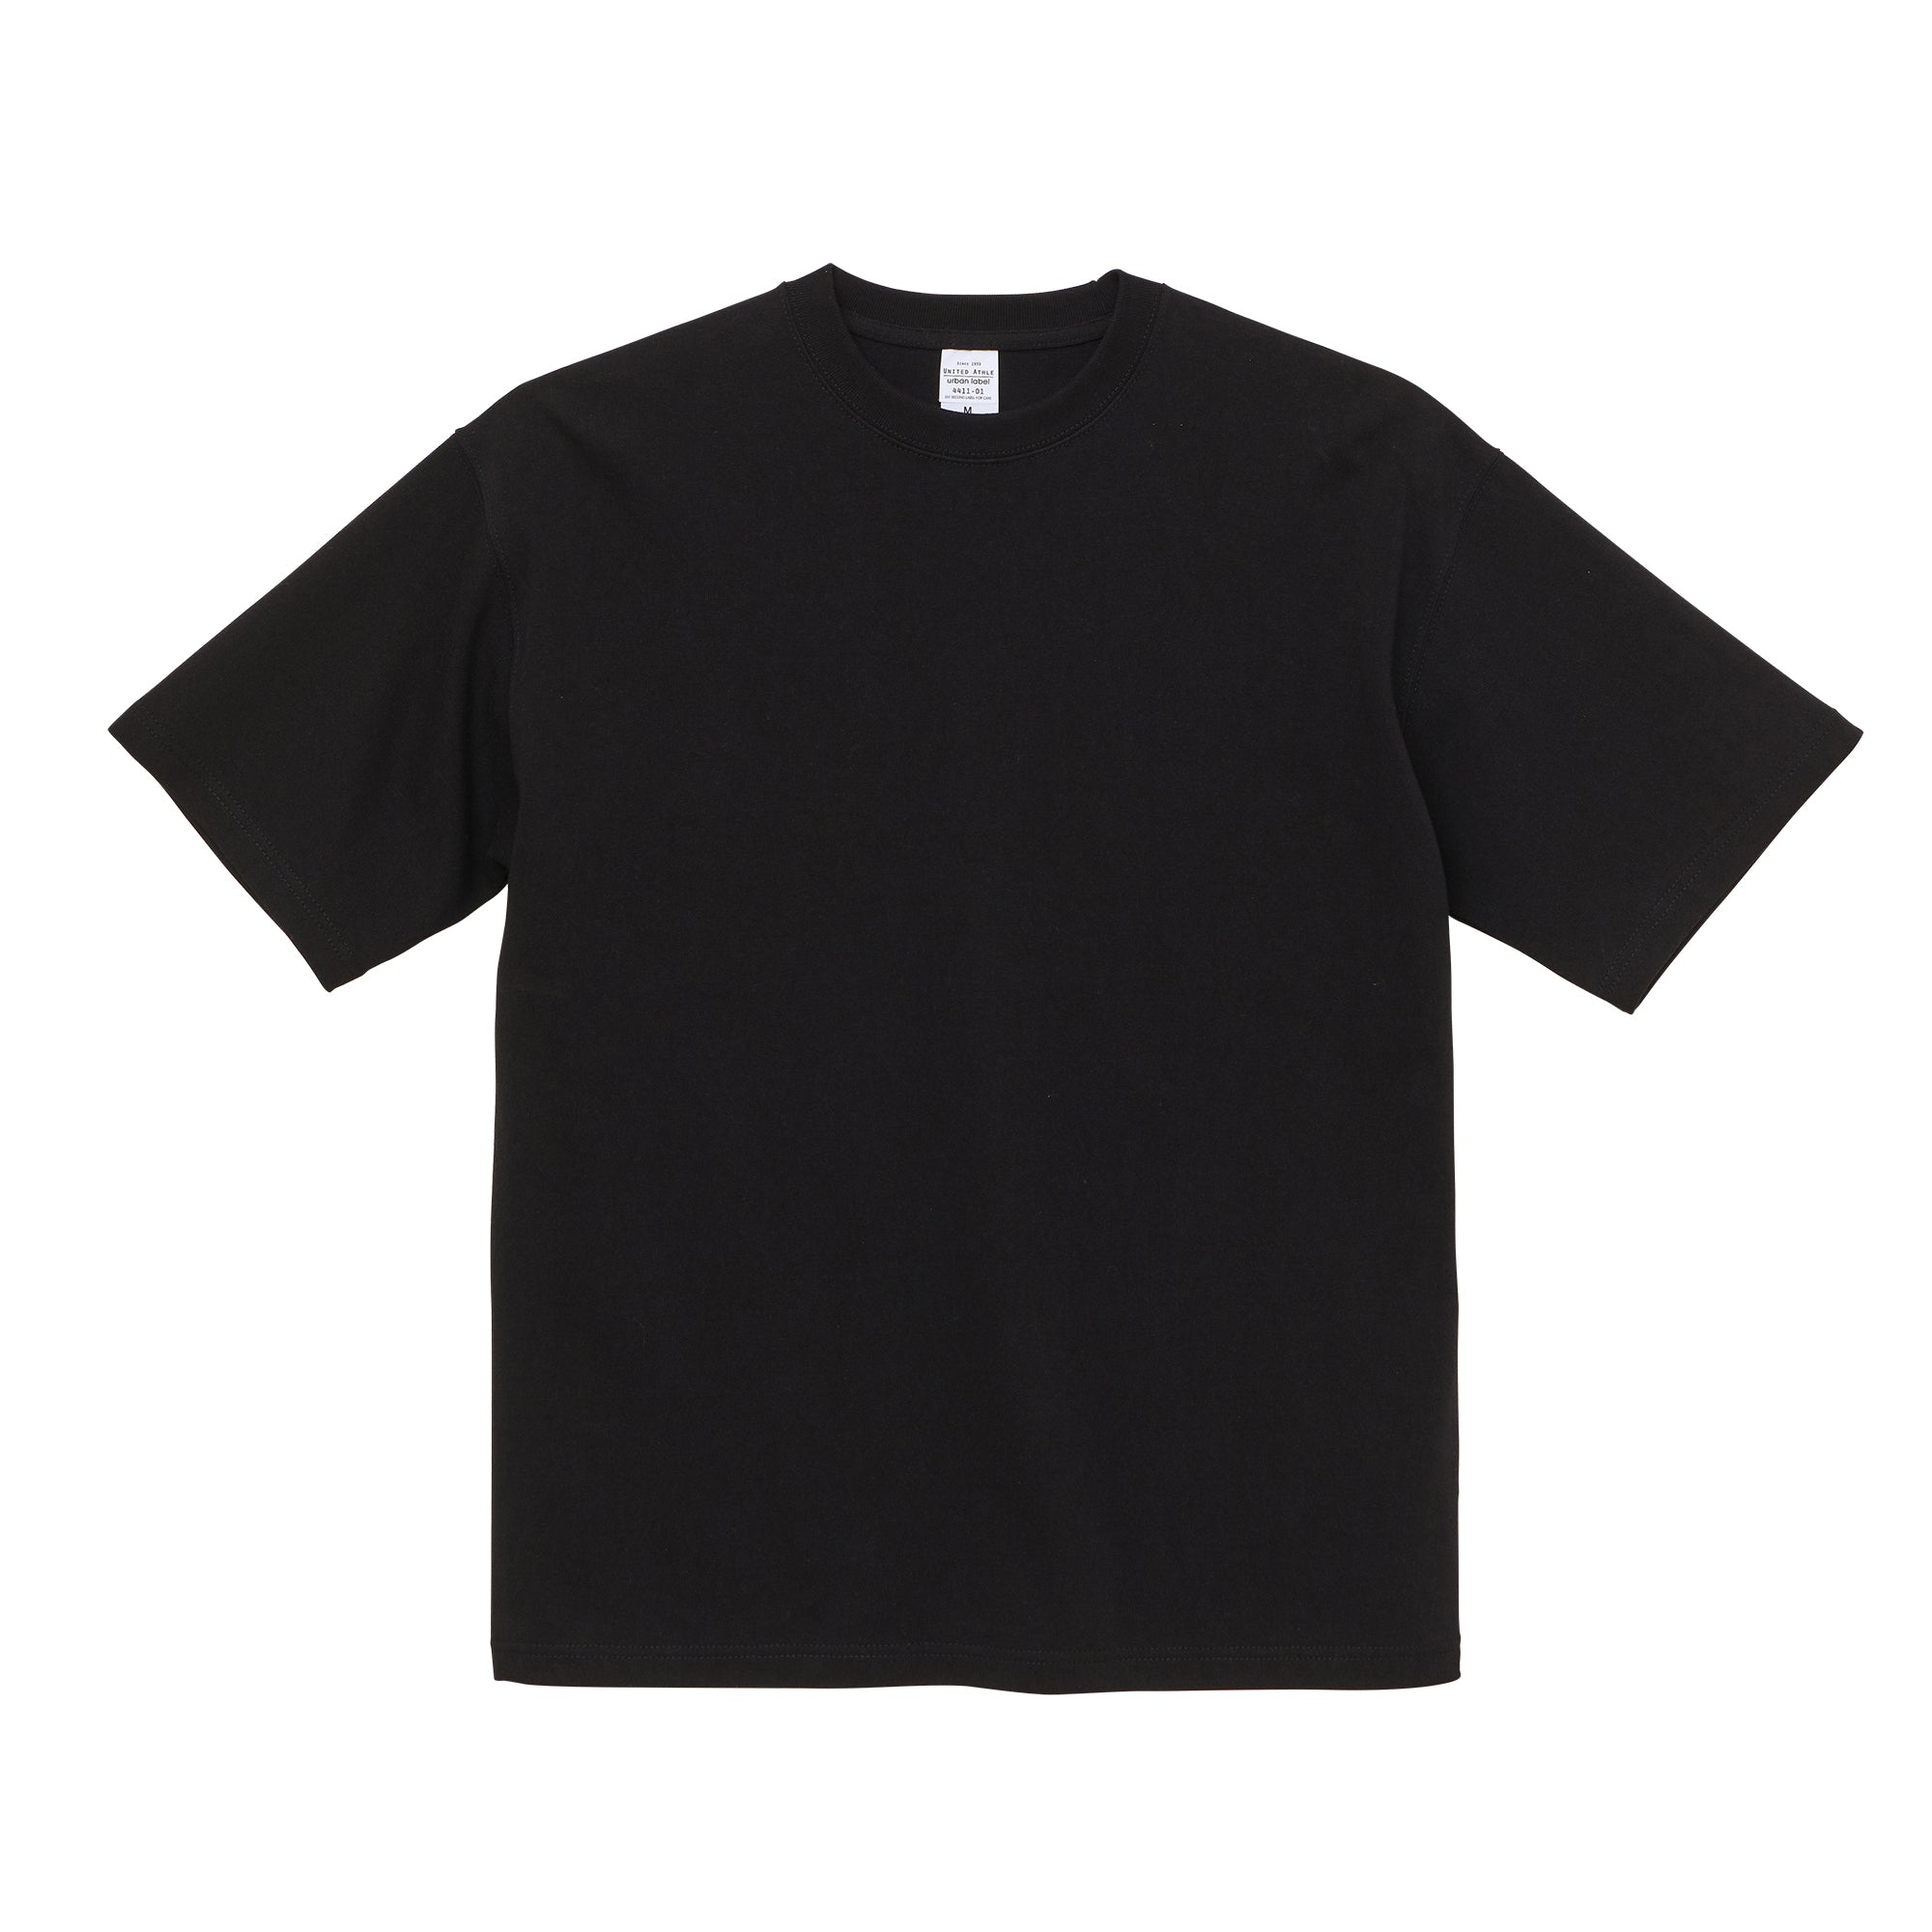 4411 - 9.1oz Magnum Weight Big Silhouette T-shirt - Black x 1